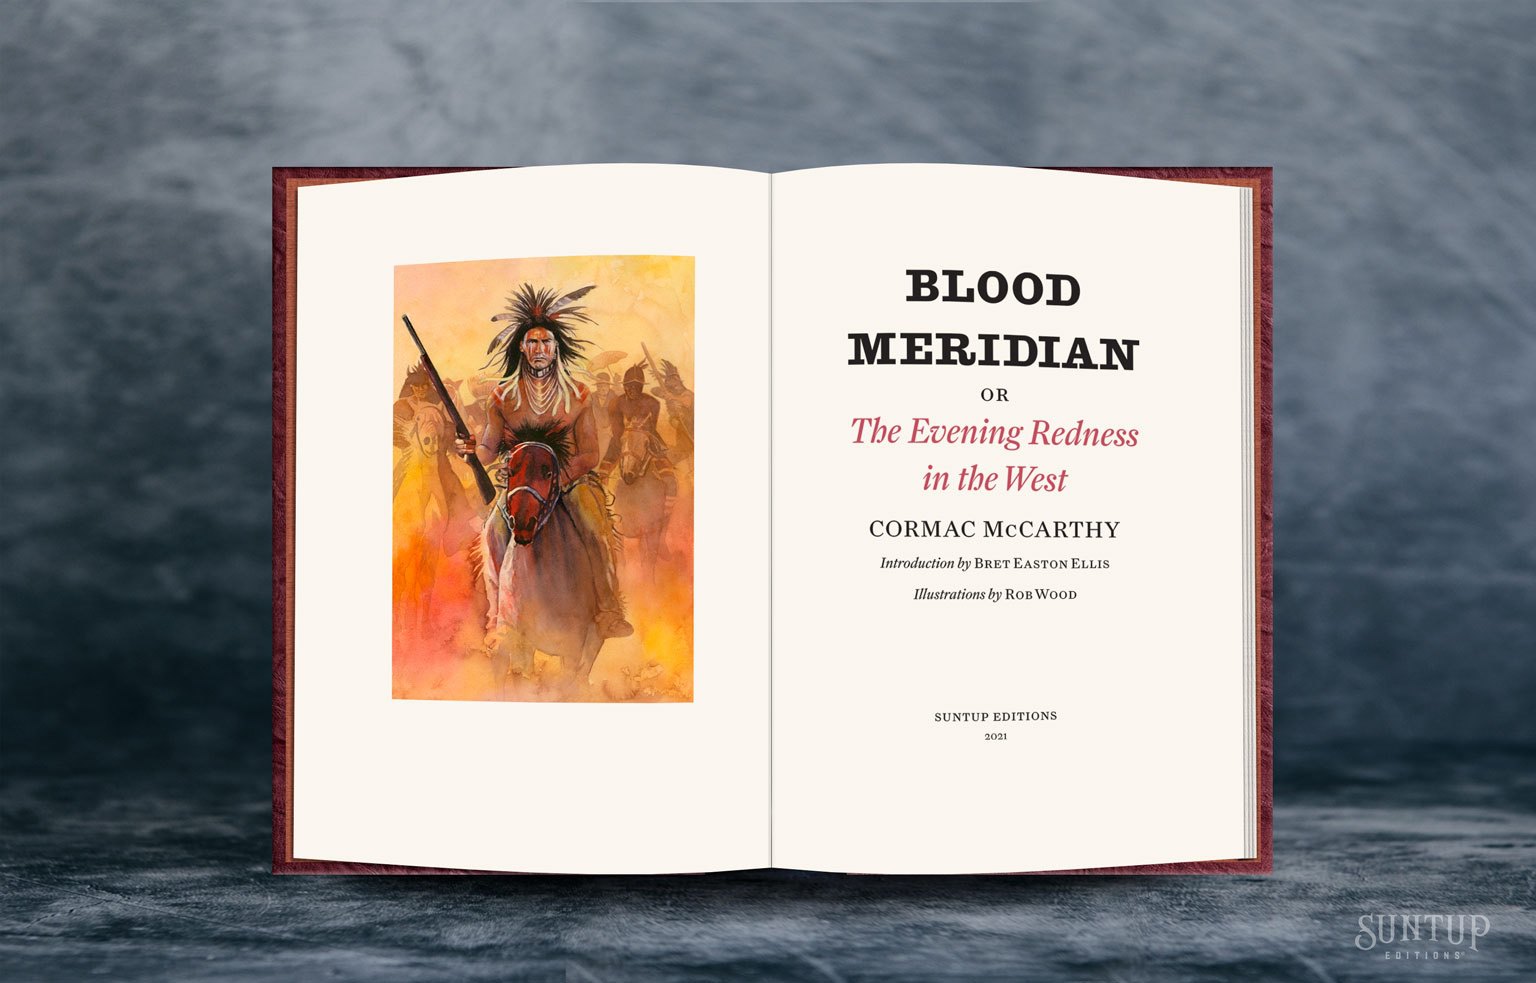 The Brutal Beauty of Cormac McCarthy's 'Blood Meridian' - WSJ